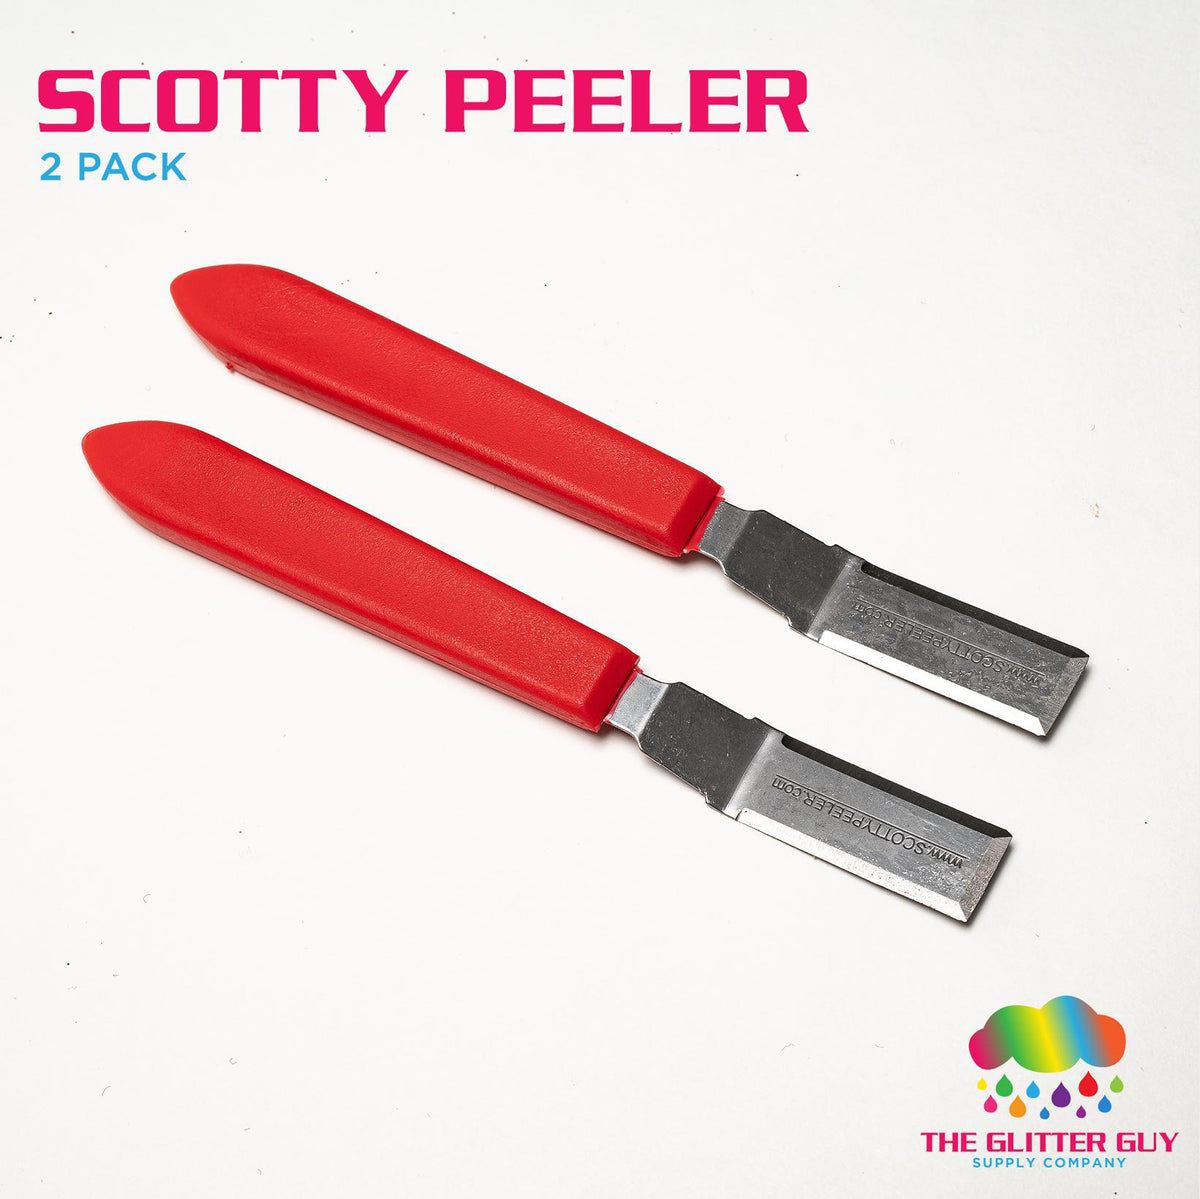 Scotty Peeler Review 